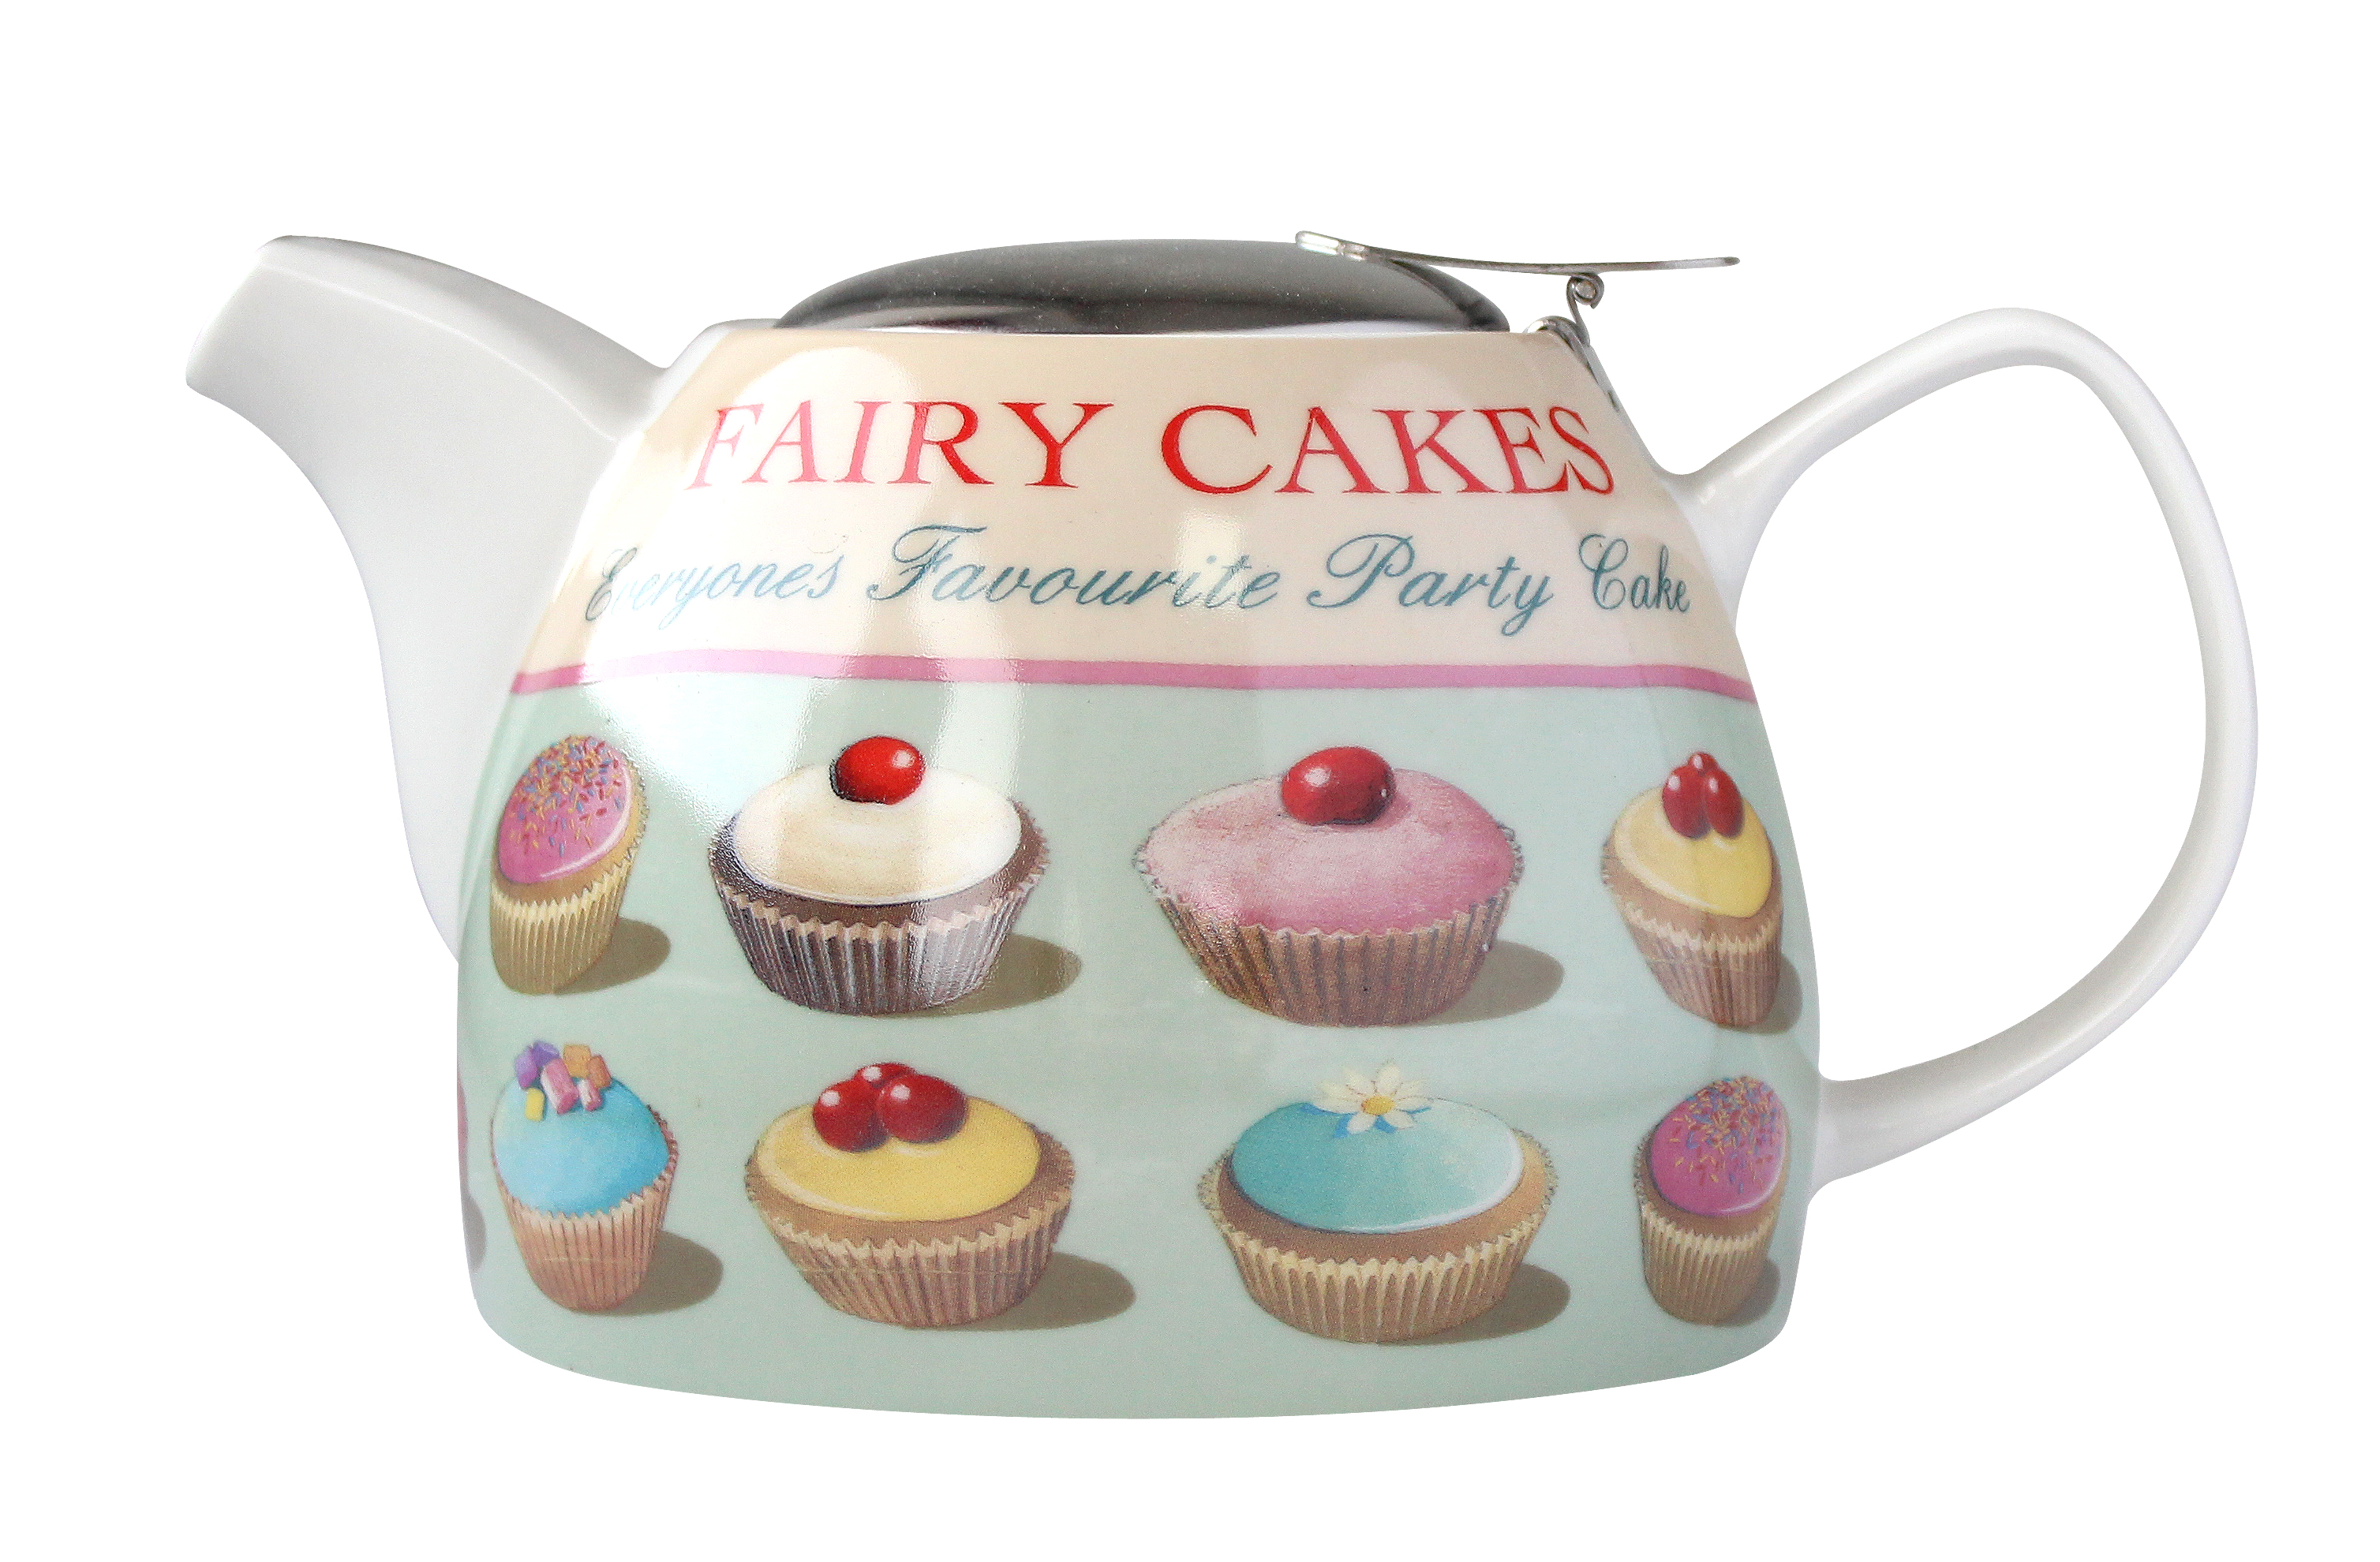 Fairy Cake Teapot Town Bakery Gift